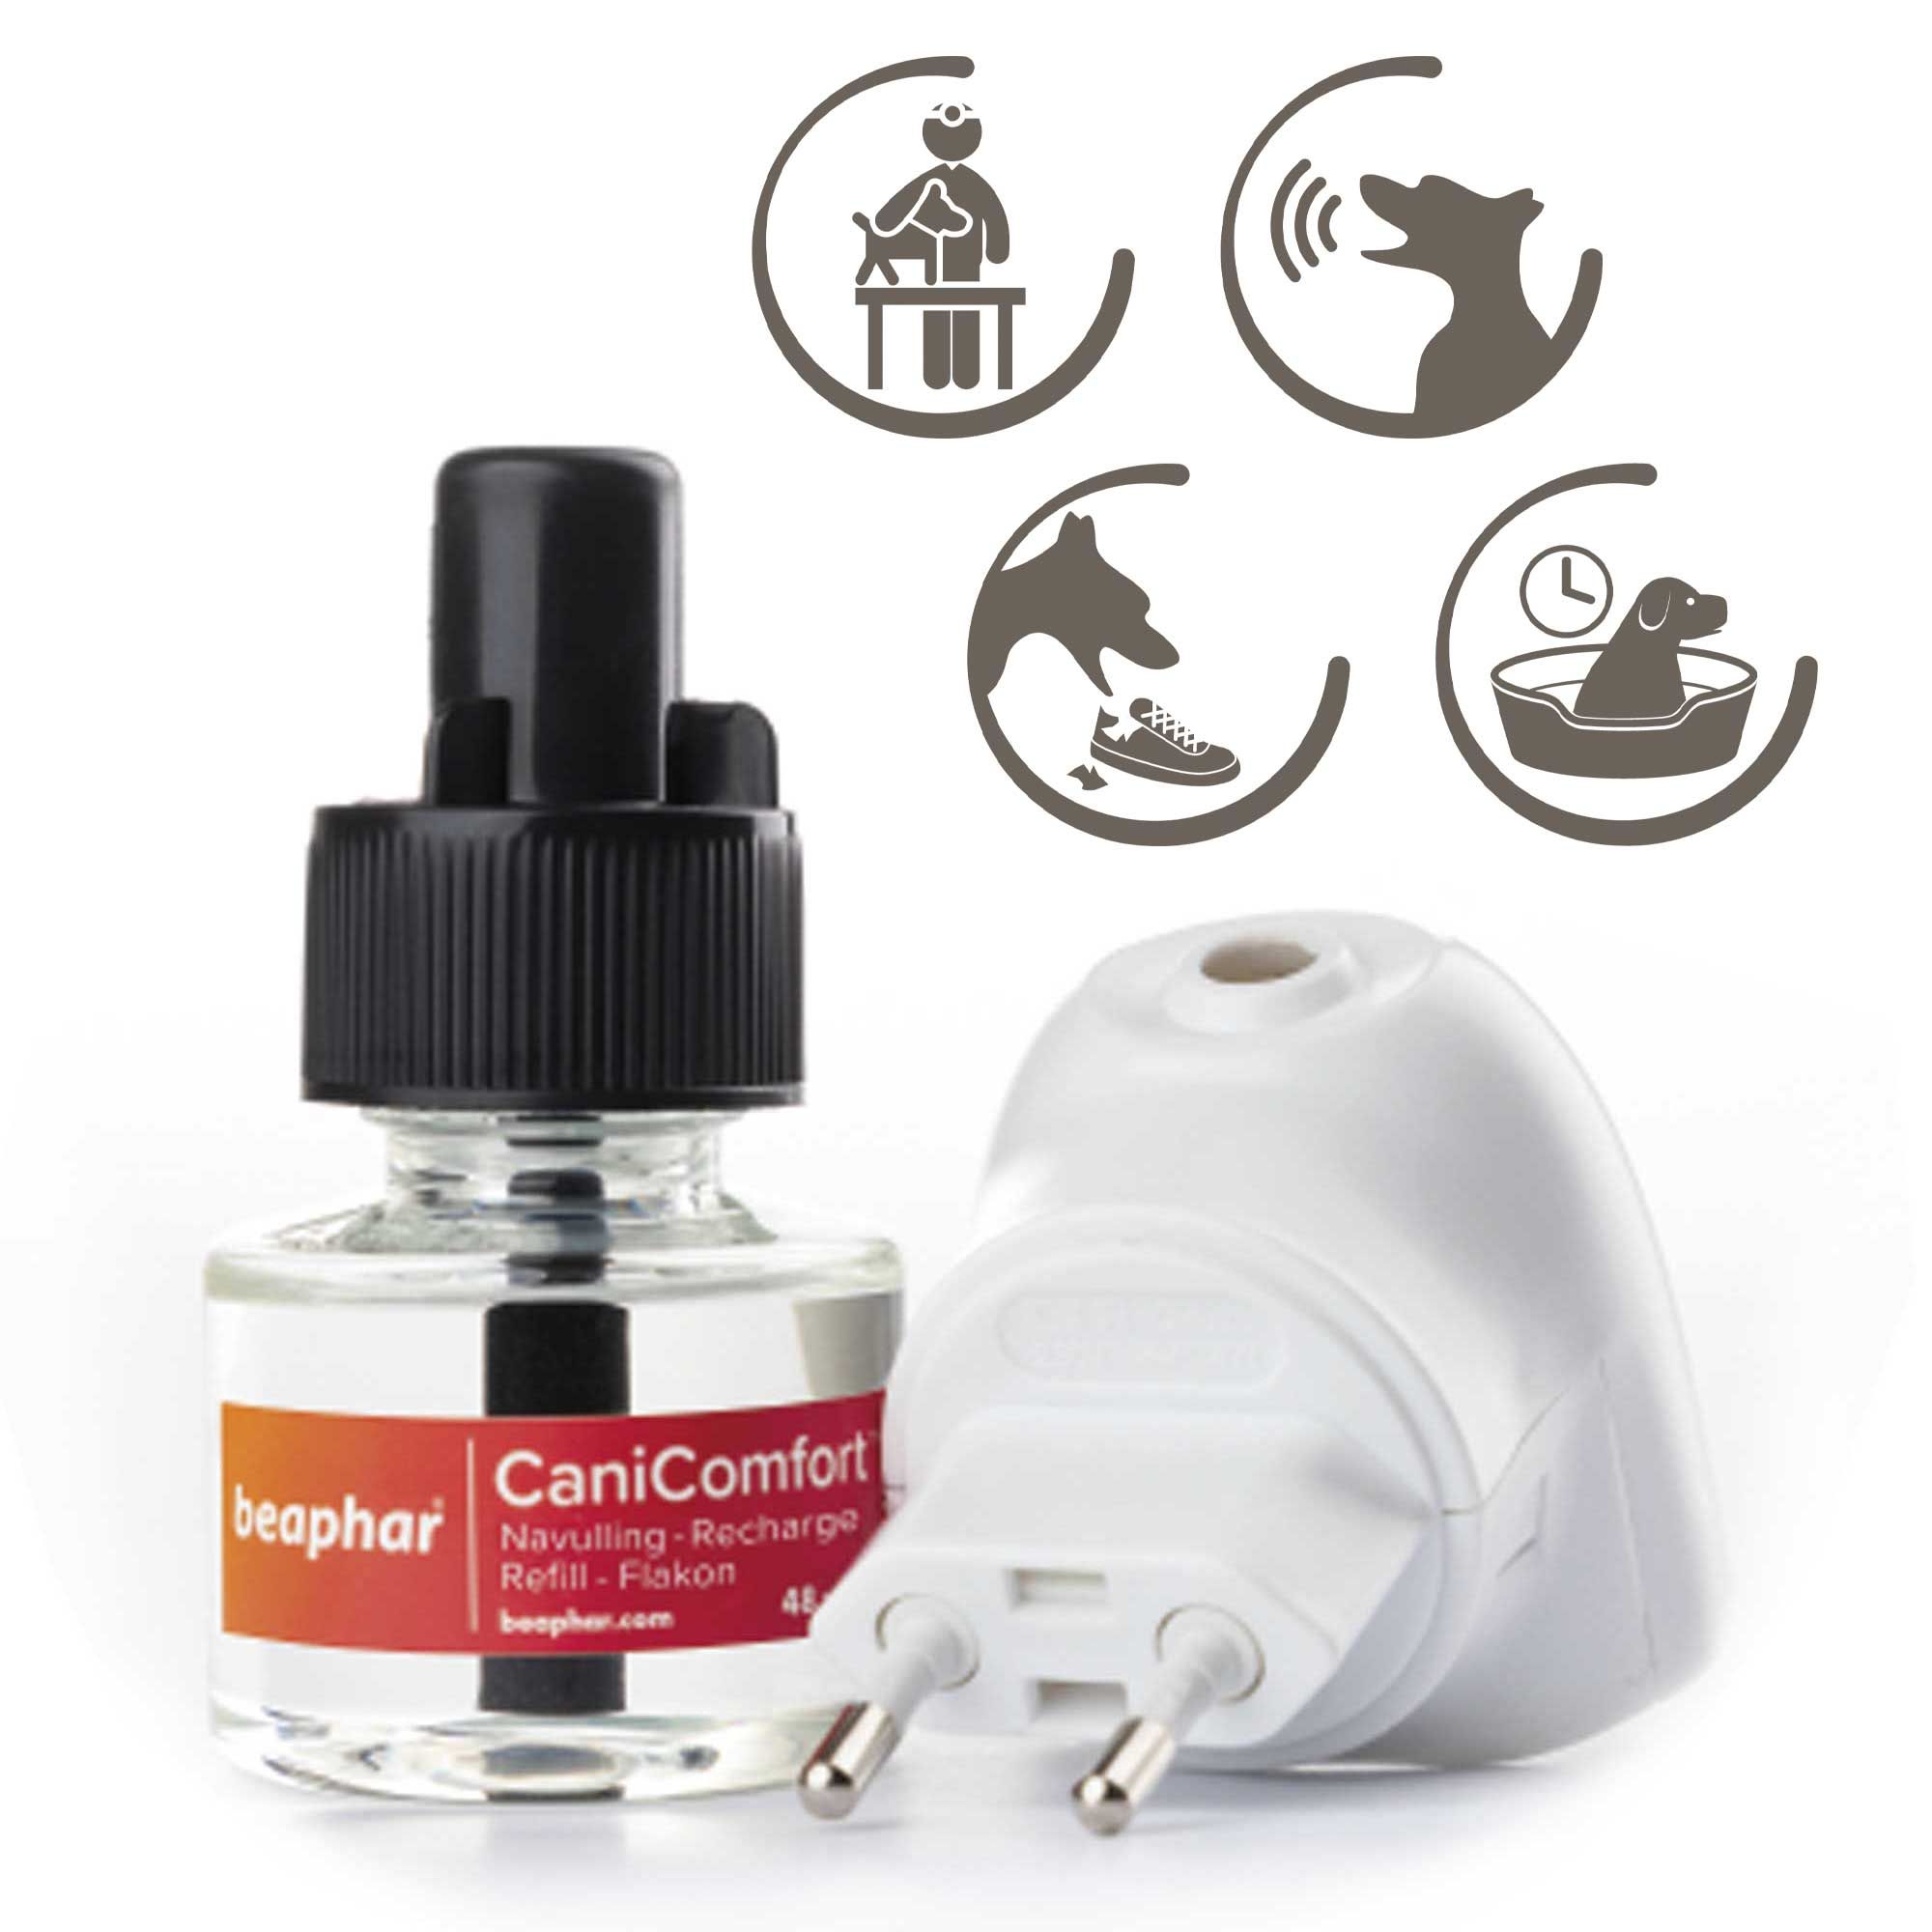 Beaphar CaniComfort Starter Kit - Pheromone zur Beruhigung gegen Ängste Stress